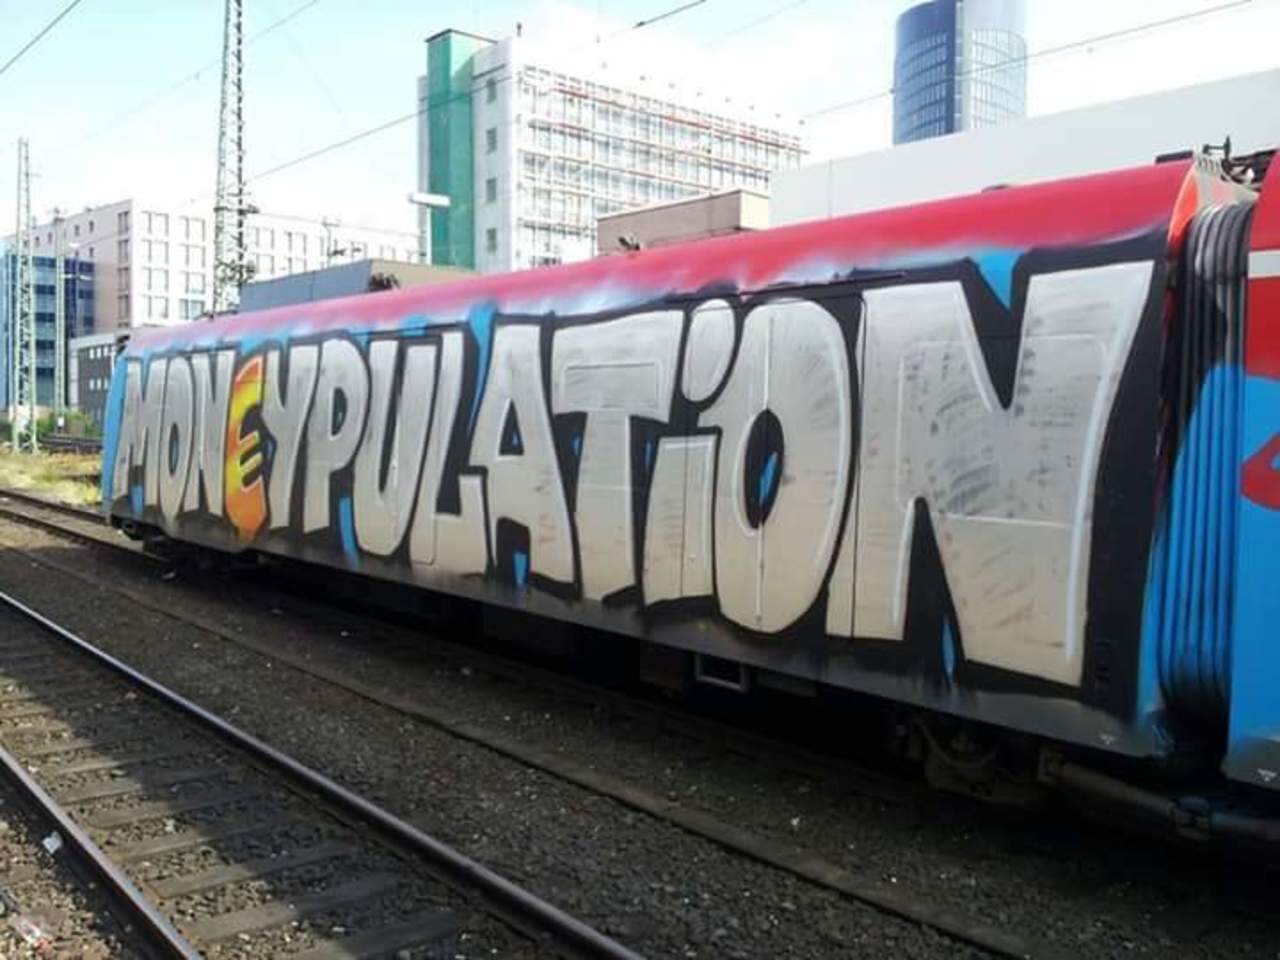 RT @Abbiad86: "MON€YPULATION"
#Graffiti #StreetArt https://t.co/O3JBsz5DVY